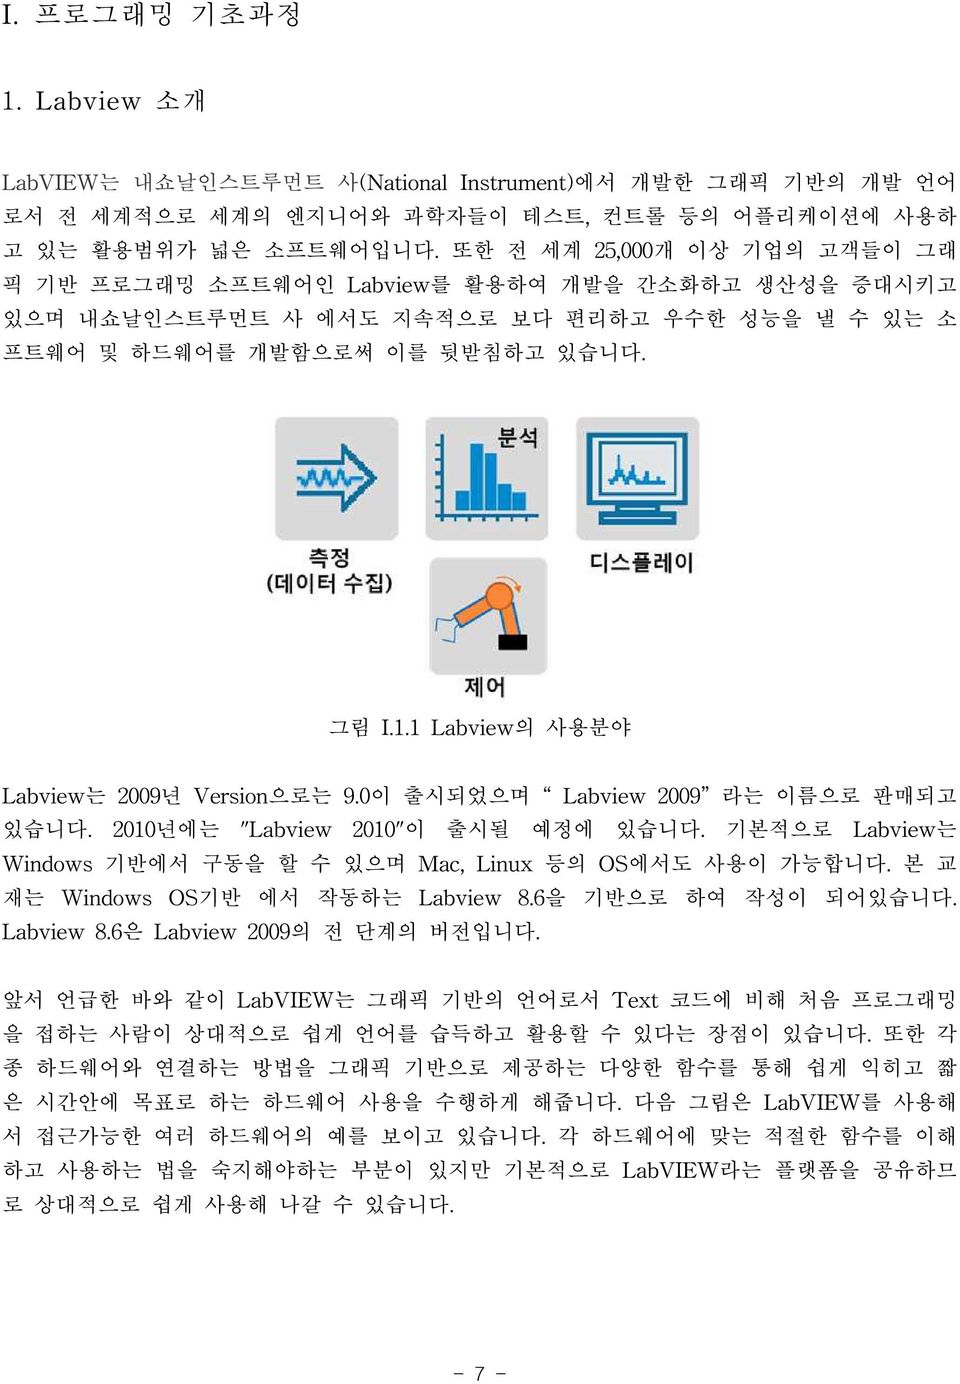 1 Labview의 사용분야 Labview는 2009년 Version으로는 9.0이 출시되었으며 Labview 2009 라는 이름으로 판매되고 있습니다. 2010년에는 "Labview 2010"이 출시될 예정에 있습니다. 기본적으로 Labview는 Windows 기반에서 구동을 할 수 있으며 Mac, Linux 등의 OS에서도 사용이 가능합니다.